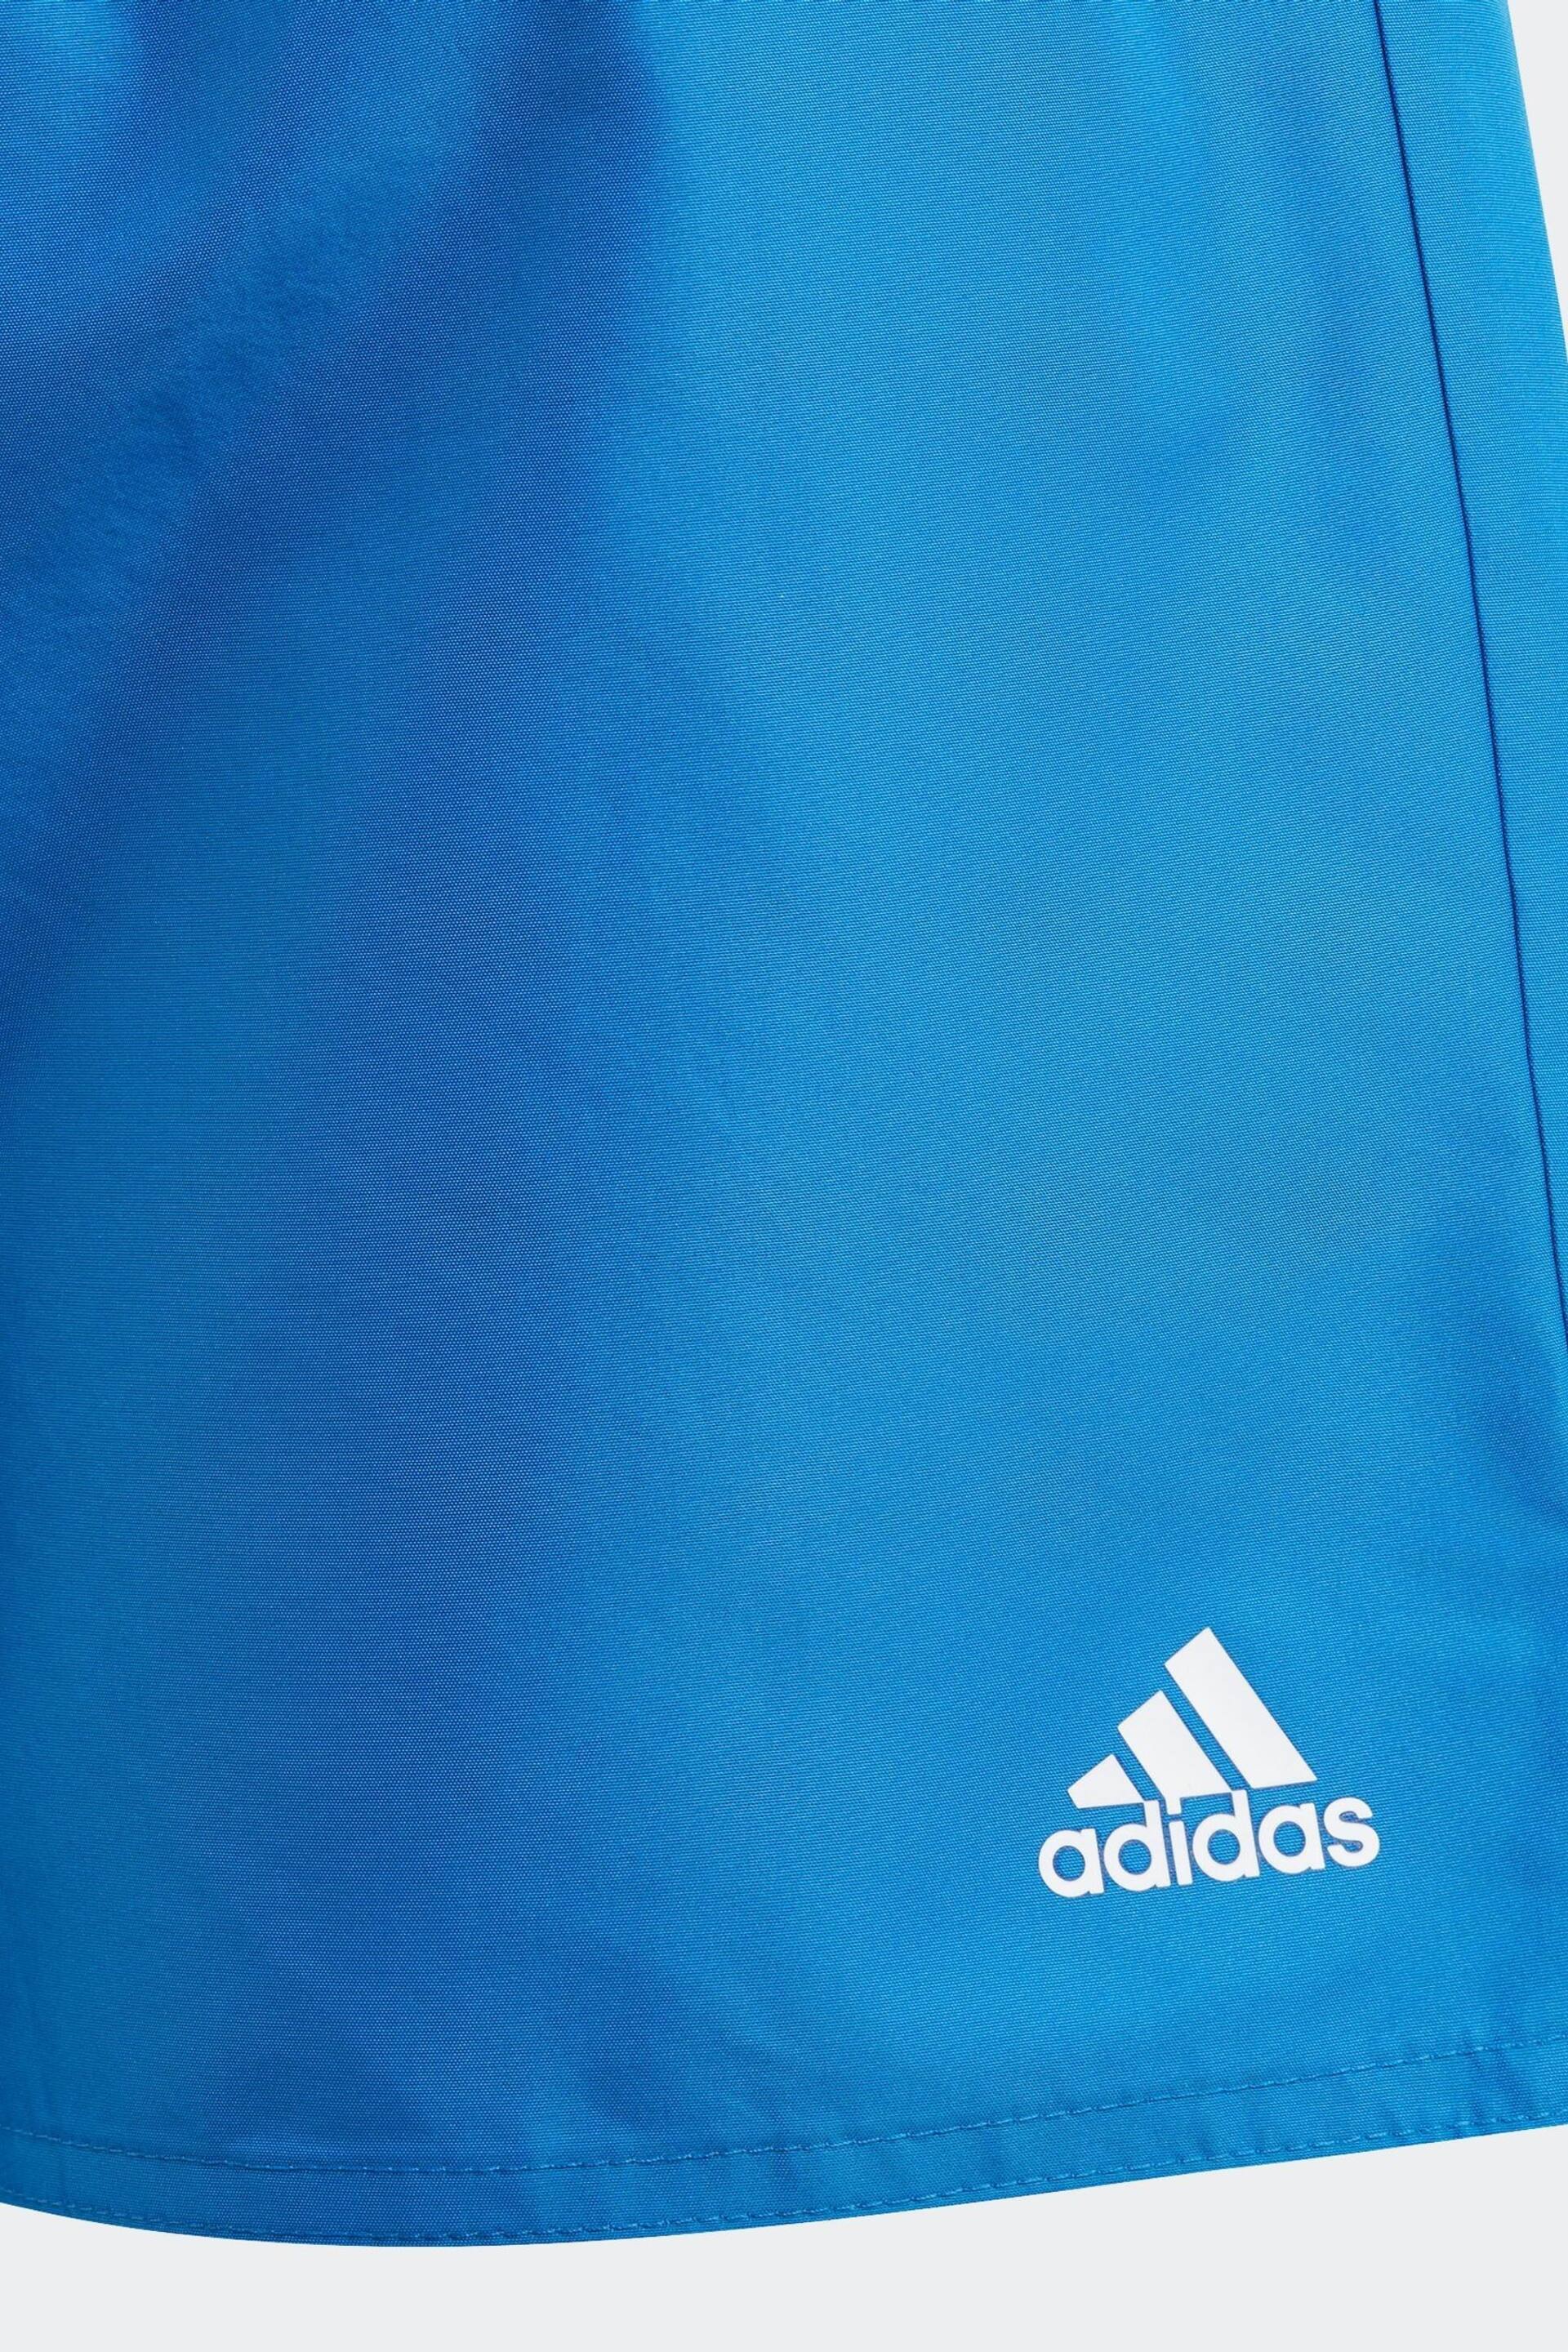 adidas Bright Blue Classic Badge Of Sport Swim Shorts - Image 5 of 5